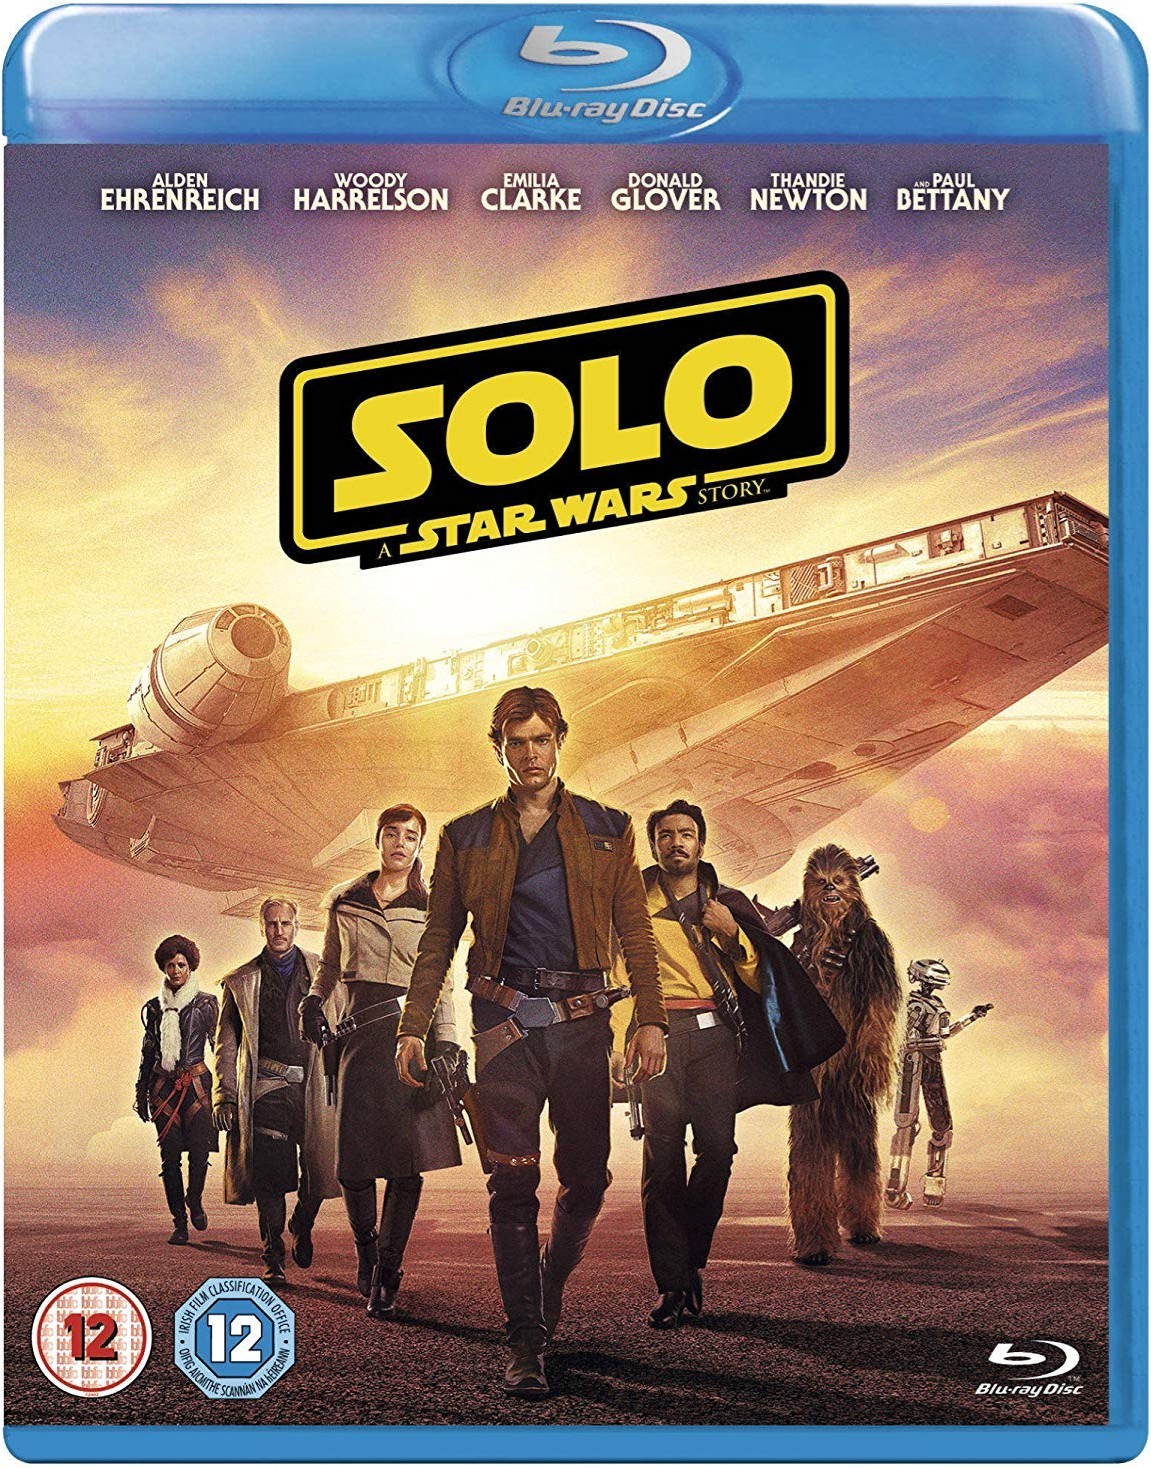 [游侠索罗·星球大战外传].Solo.A.Star.Wars.Story.2018.UHD.BluRay.2160p.HEVC.TrueHD.7.1-Thor@HDSky    54.09G-3.jpg